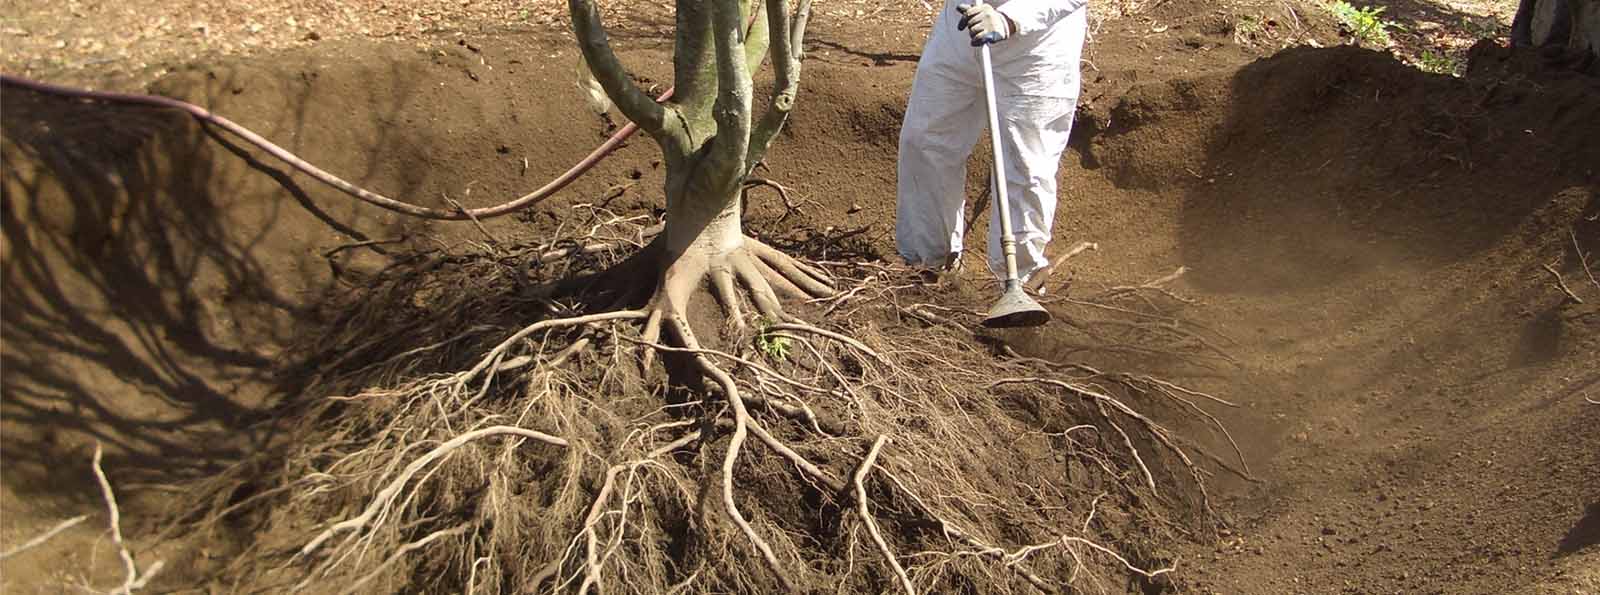 Bare root transplanting